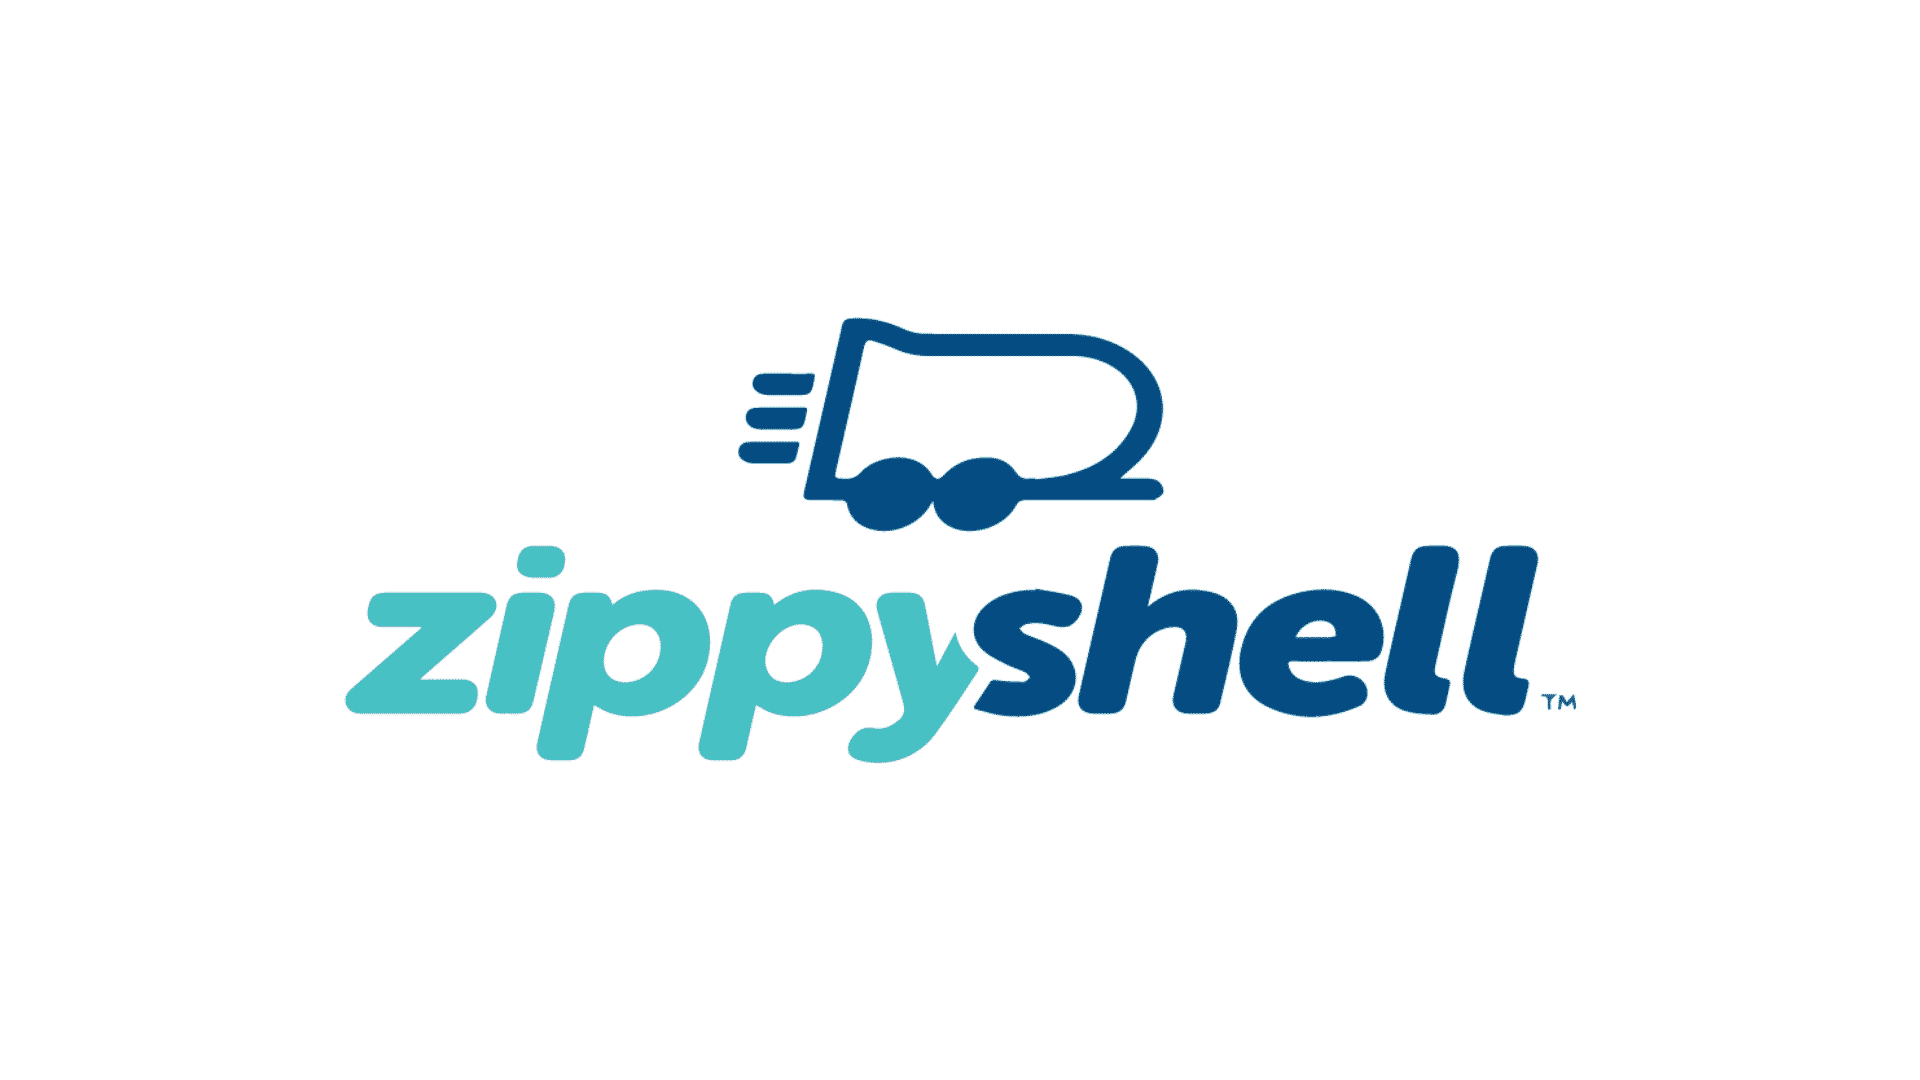 Director of Marketing at Zippy Shell